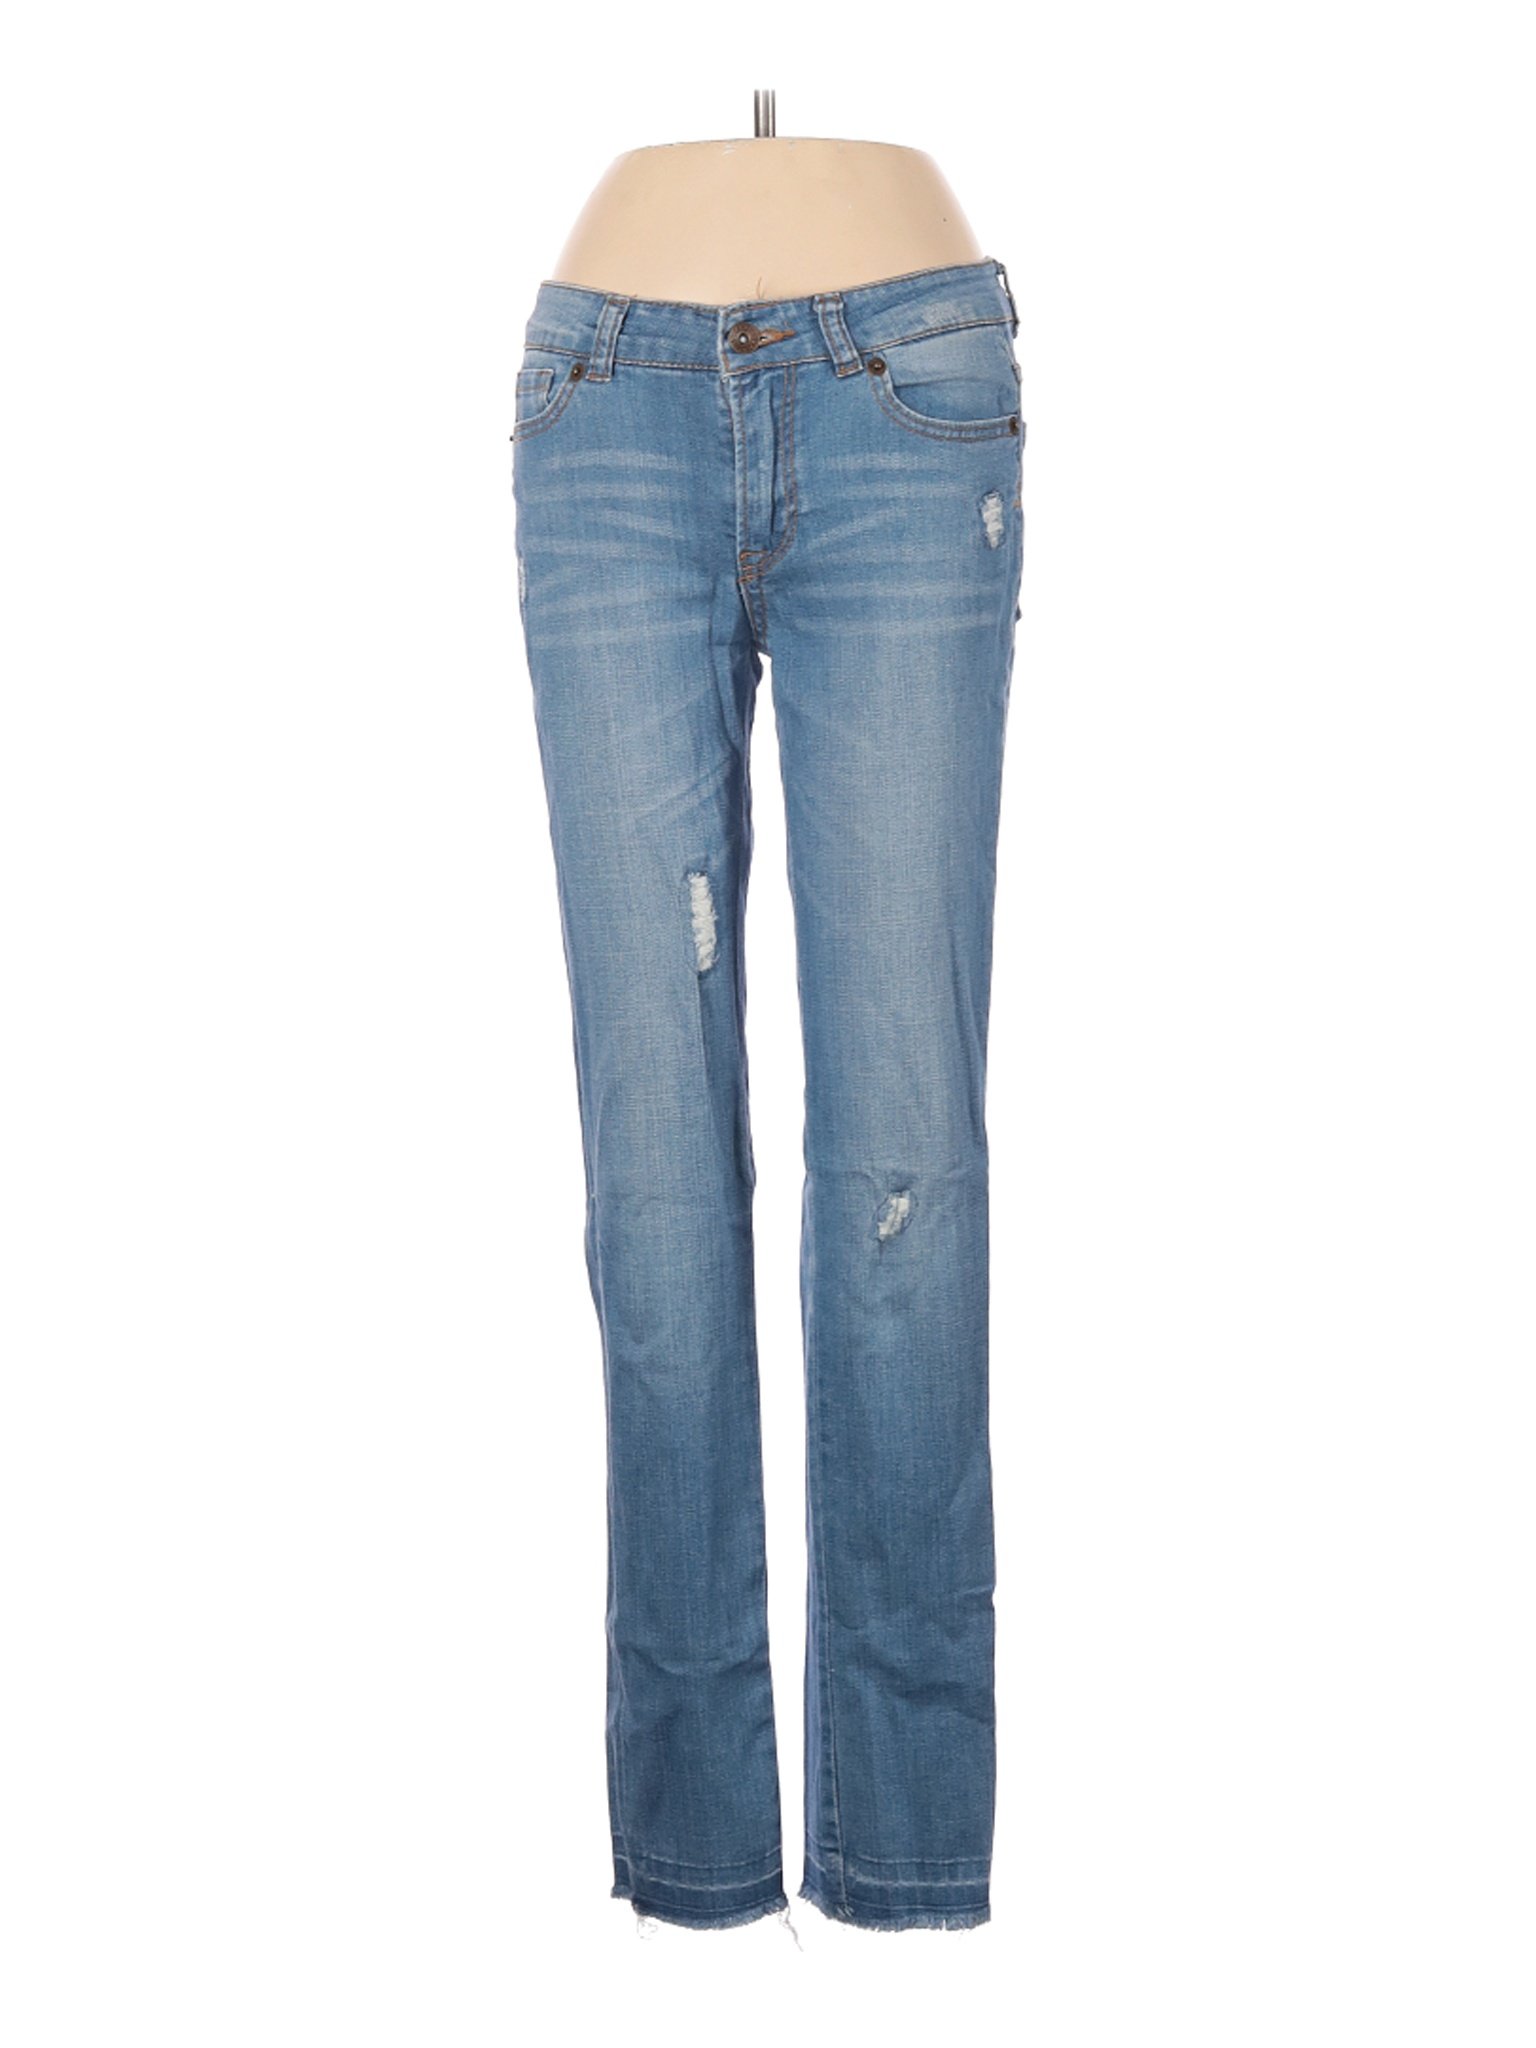 Lucky Brand Women Blue Jeans 14 | eBay